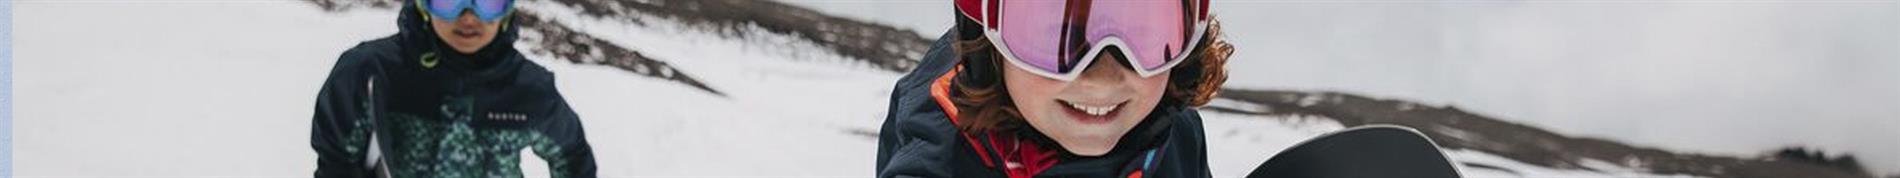 Roxy Kids Ski & Snowboard Clothing (Ages 6-16) 